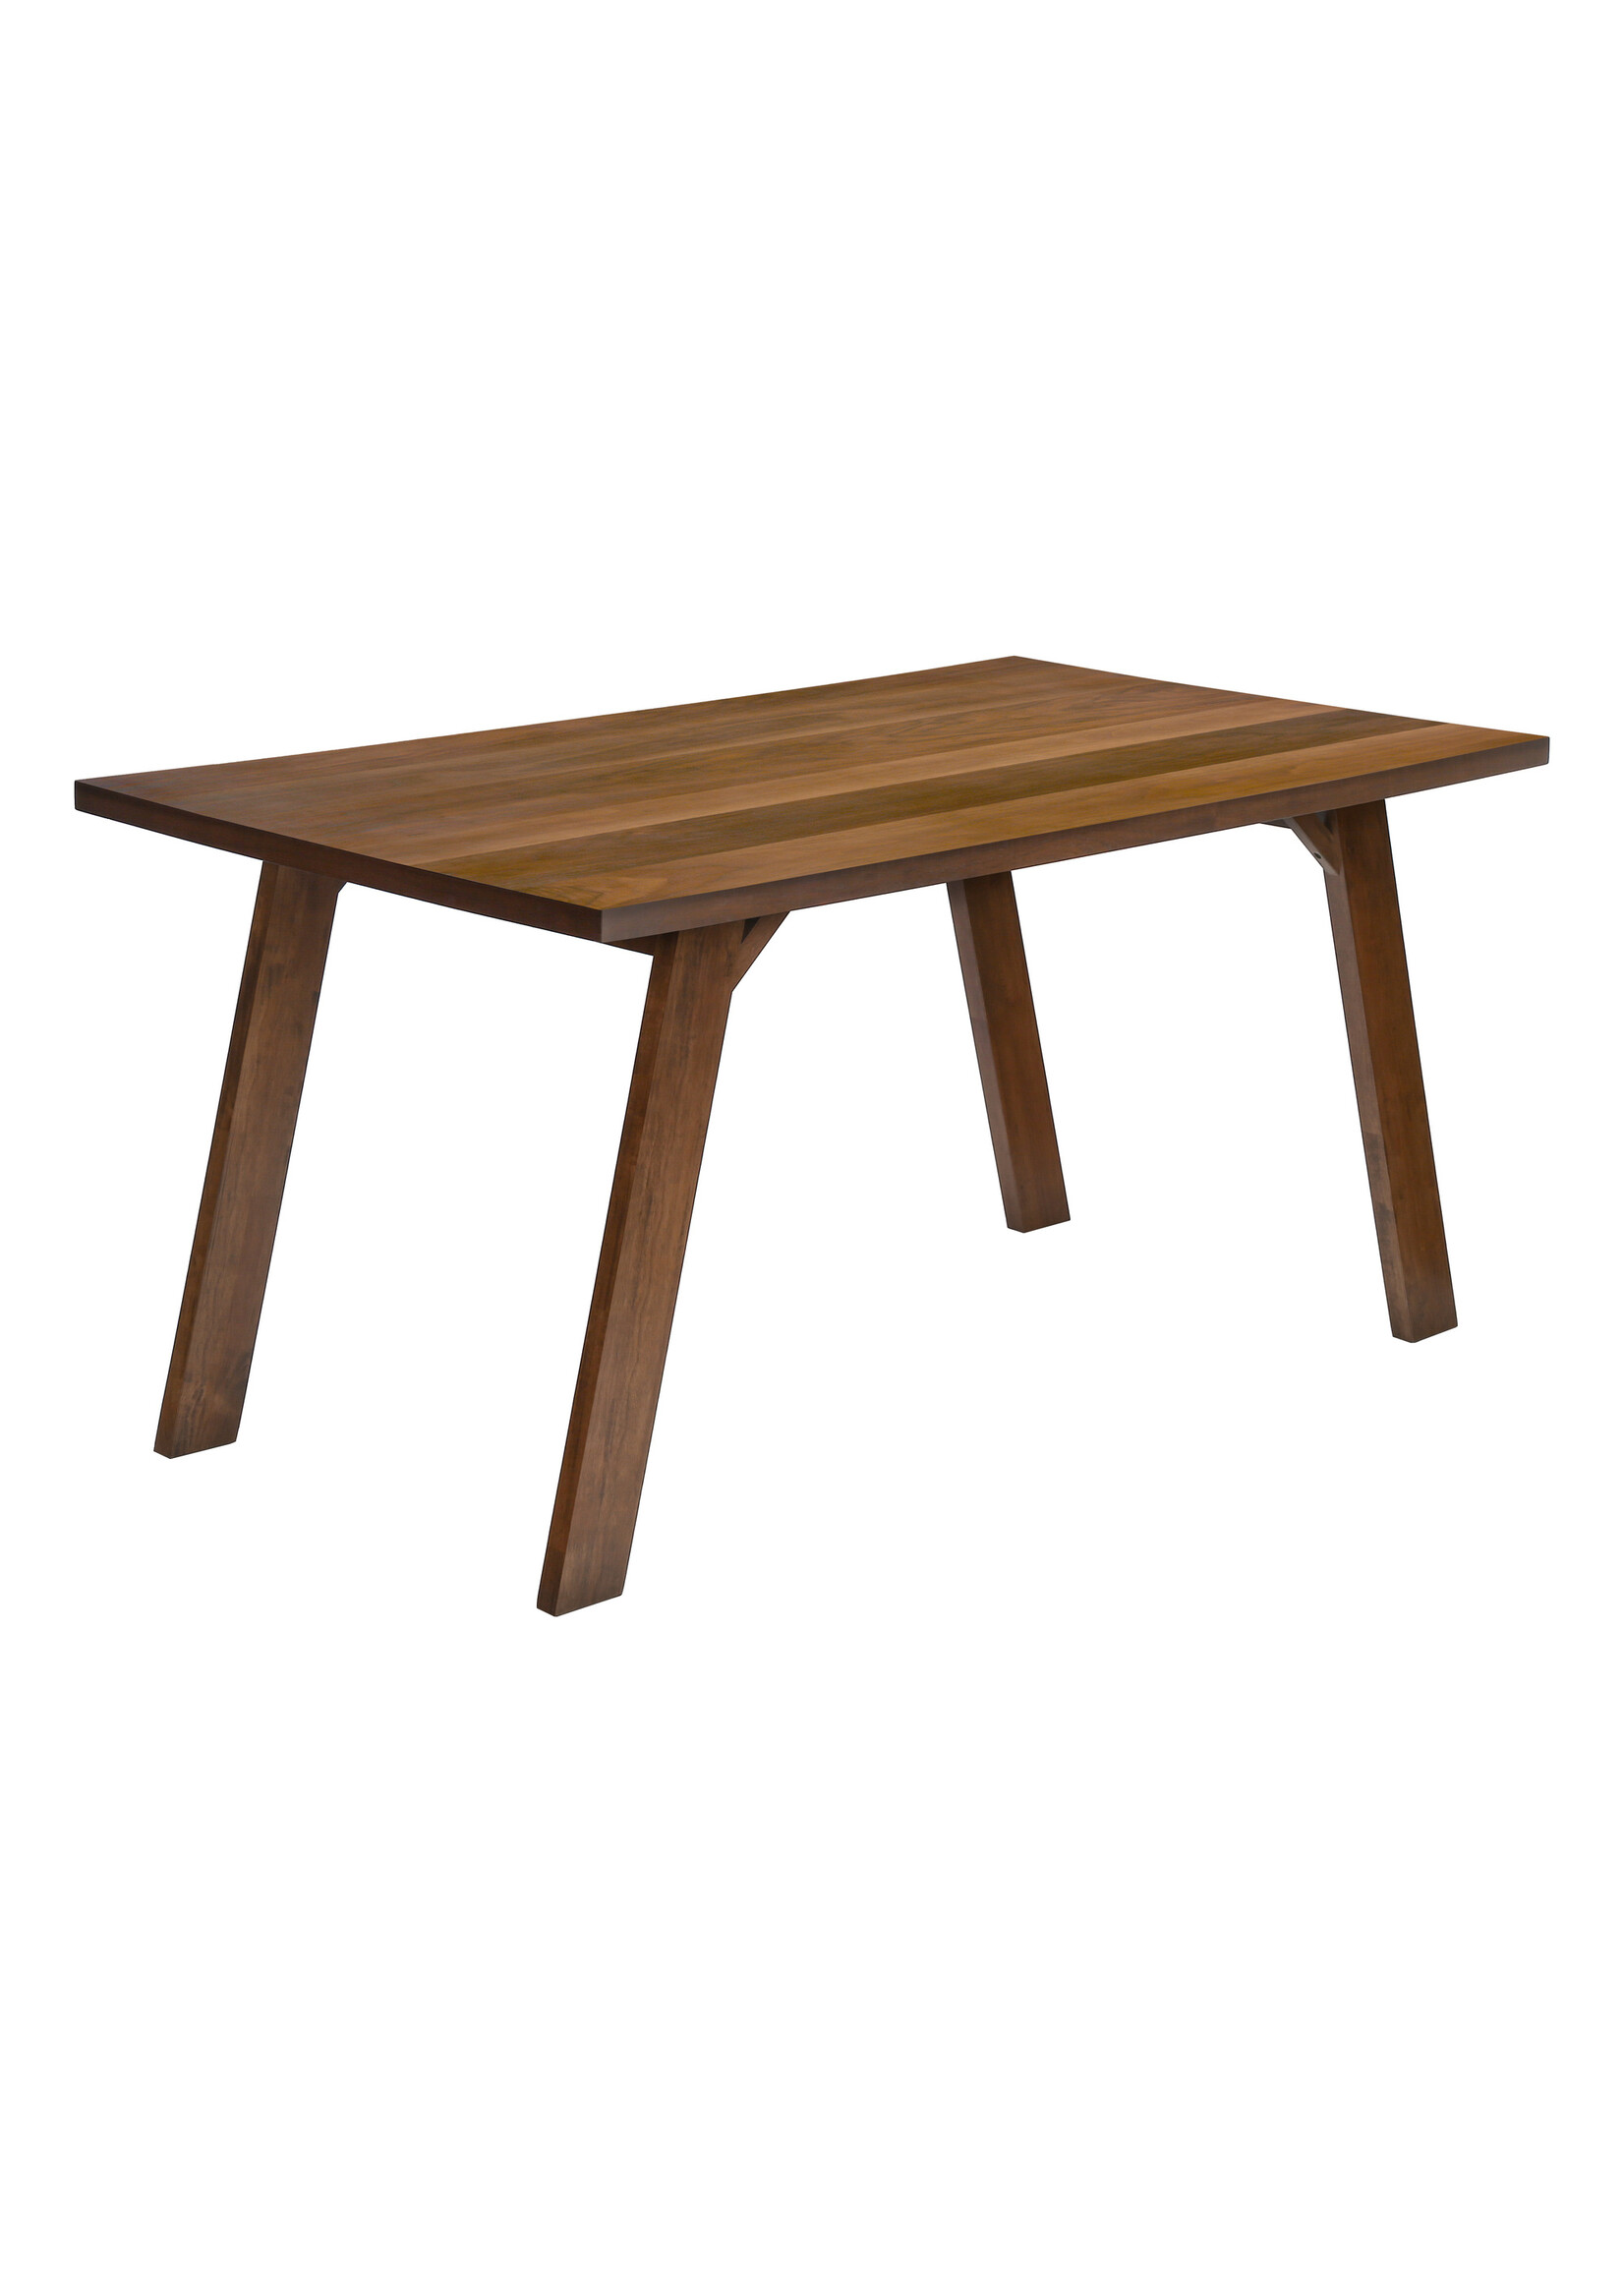 MONARCH I1315 DINING TABLE - BROWN WALNUT VENEER  36X60IN /  91x152CM